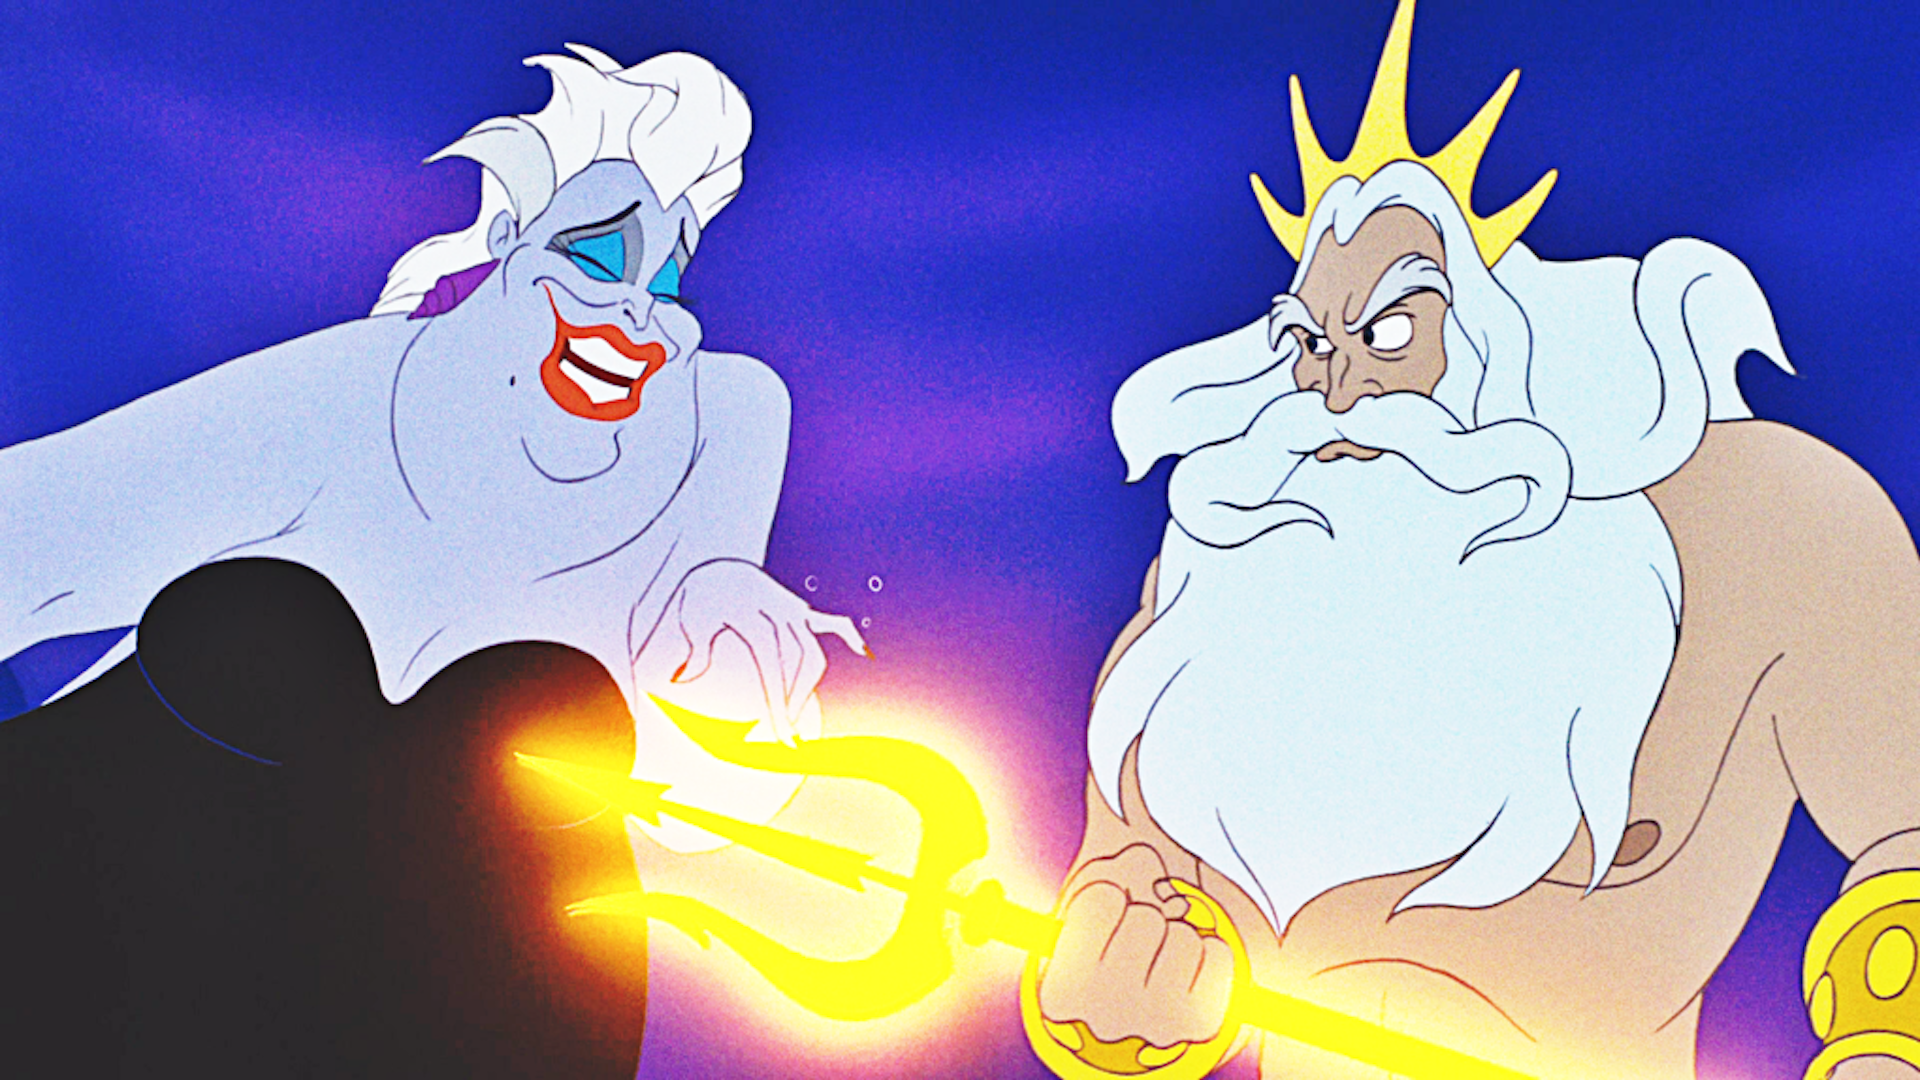 Ursula and the king